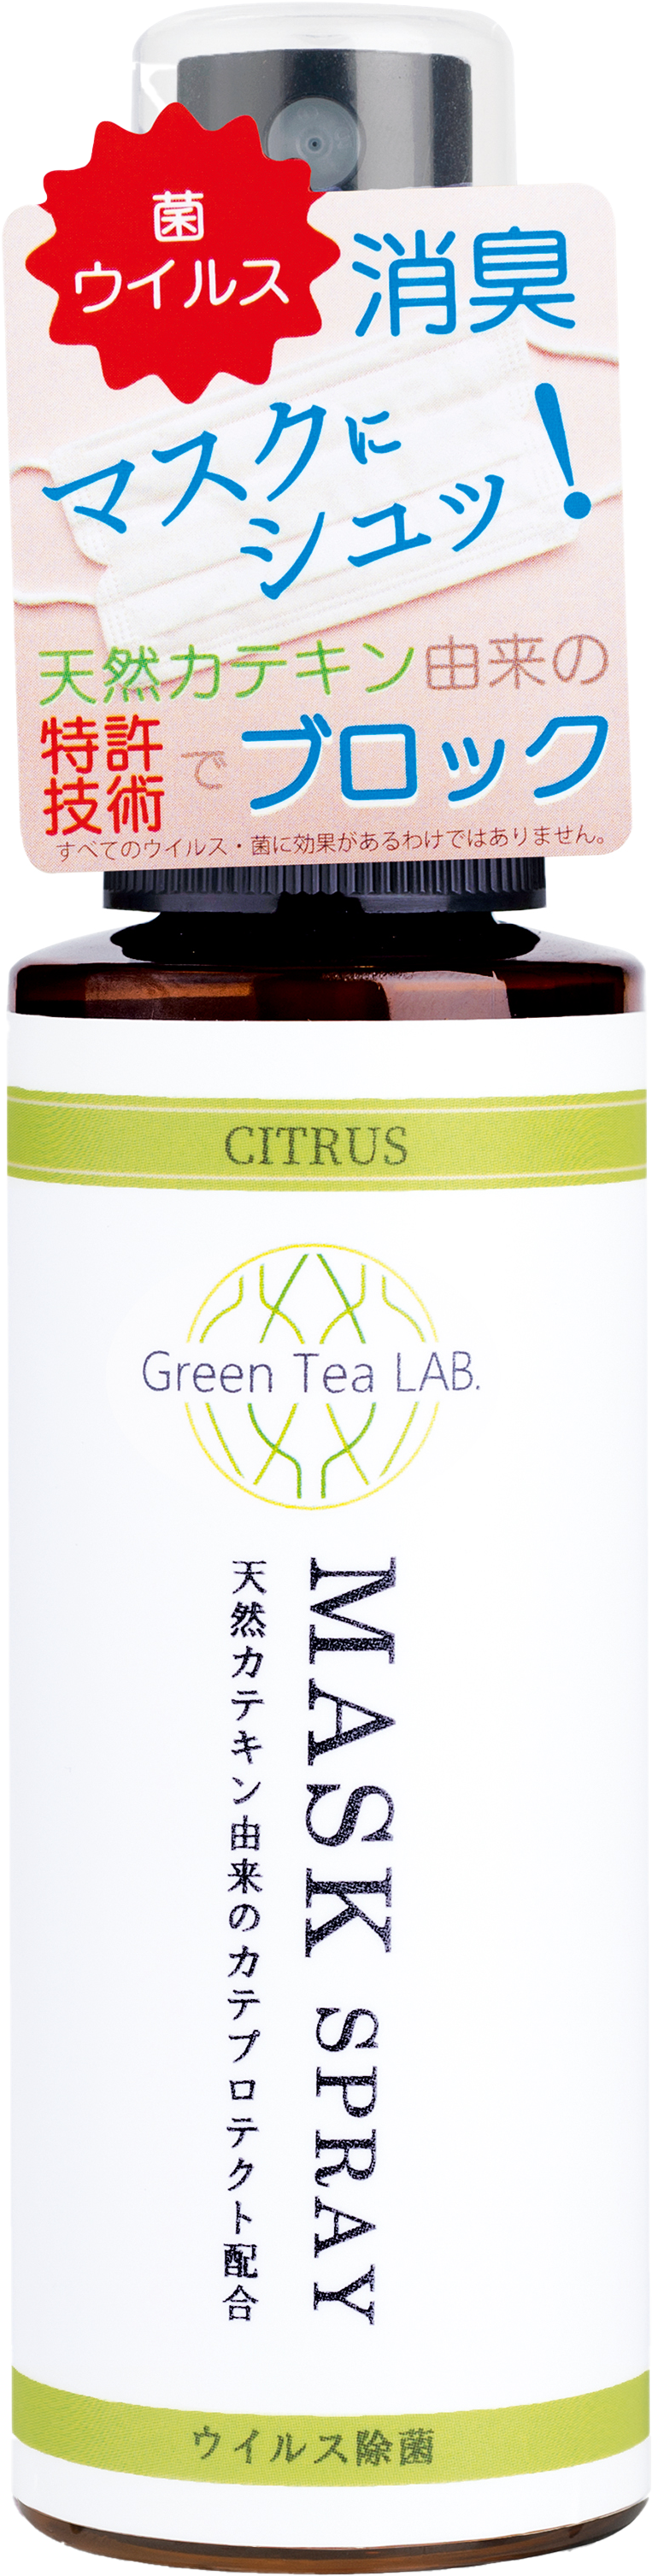 Green Tea LAB | MASK SPRAY | Anti-bacterial/Anti-viral